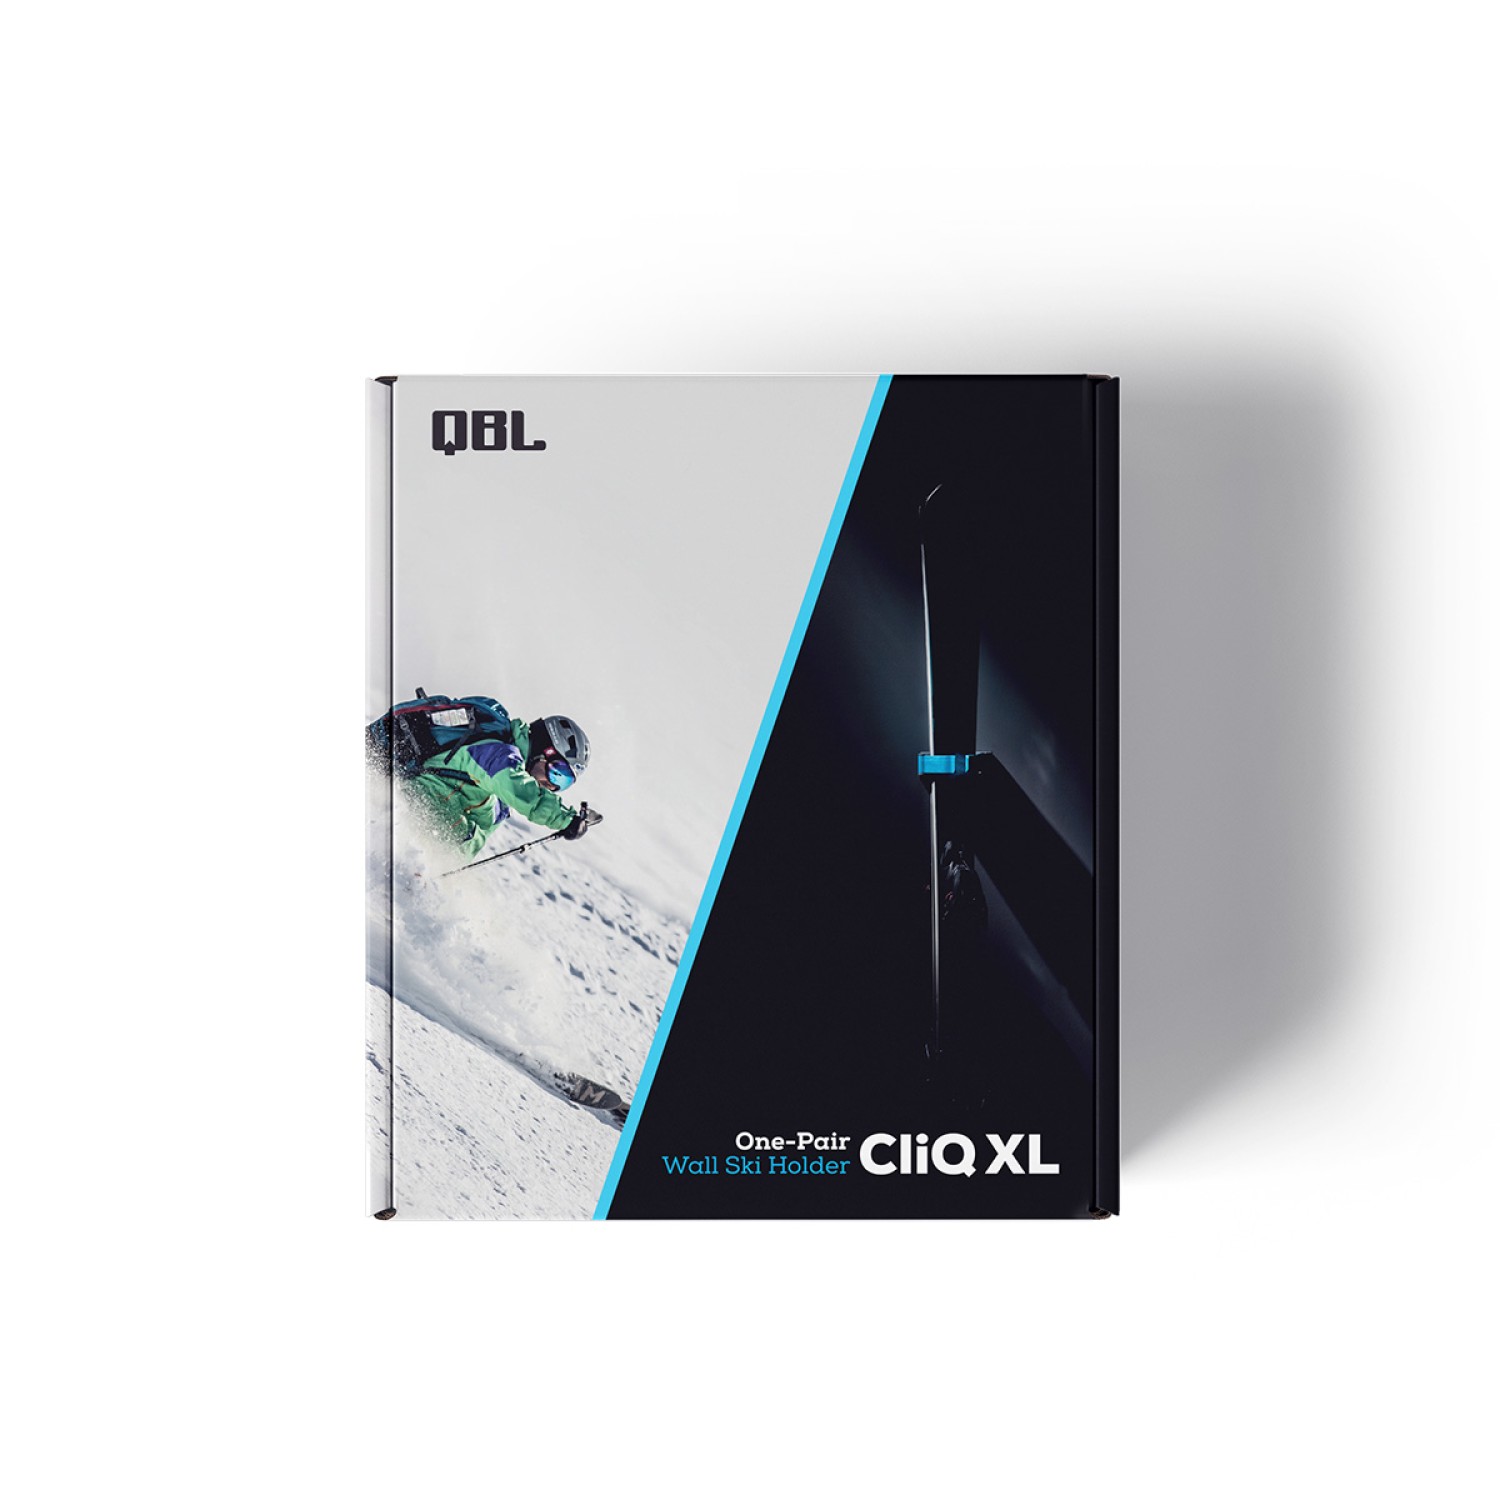 CliQ XL_ 1 pair wall ski holder